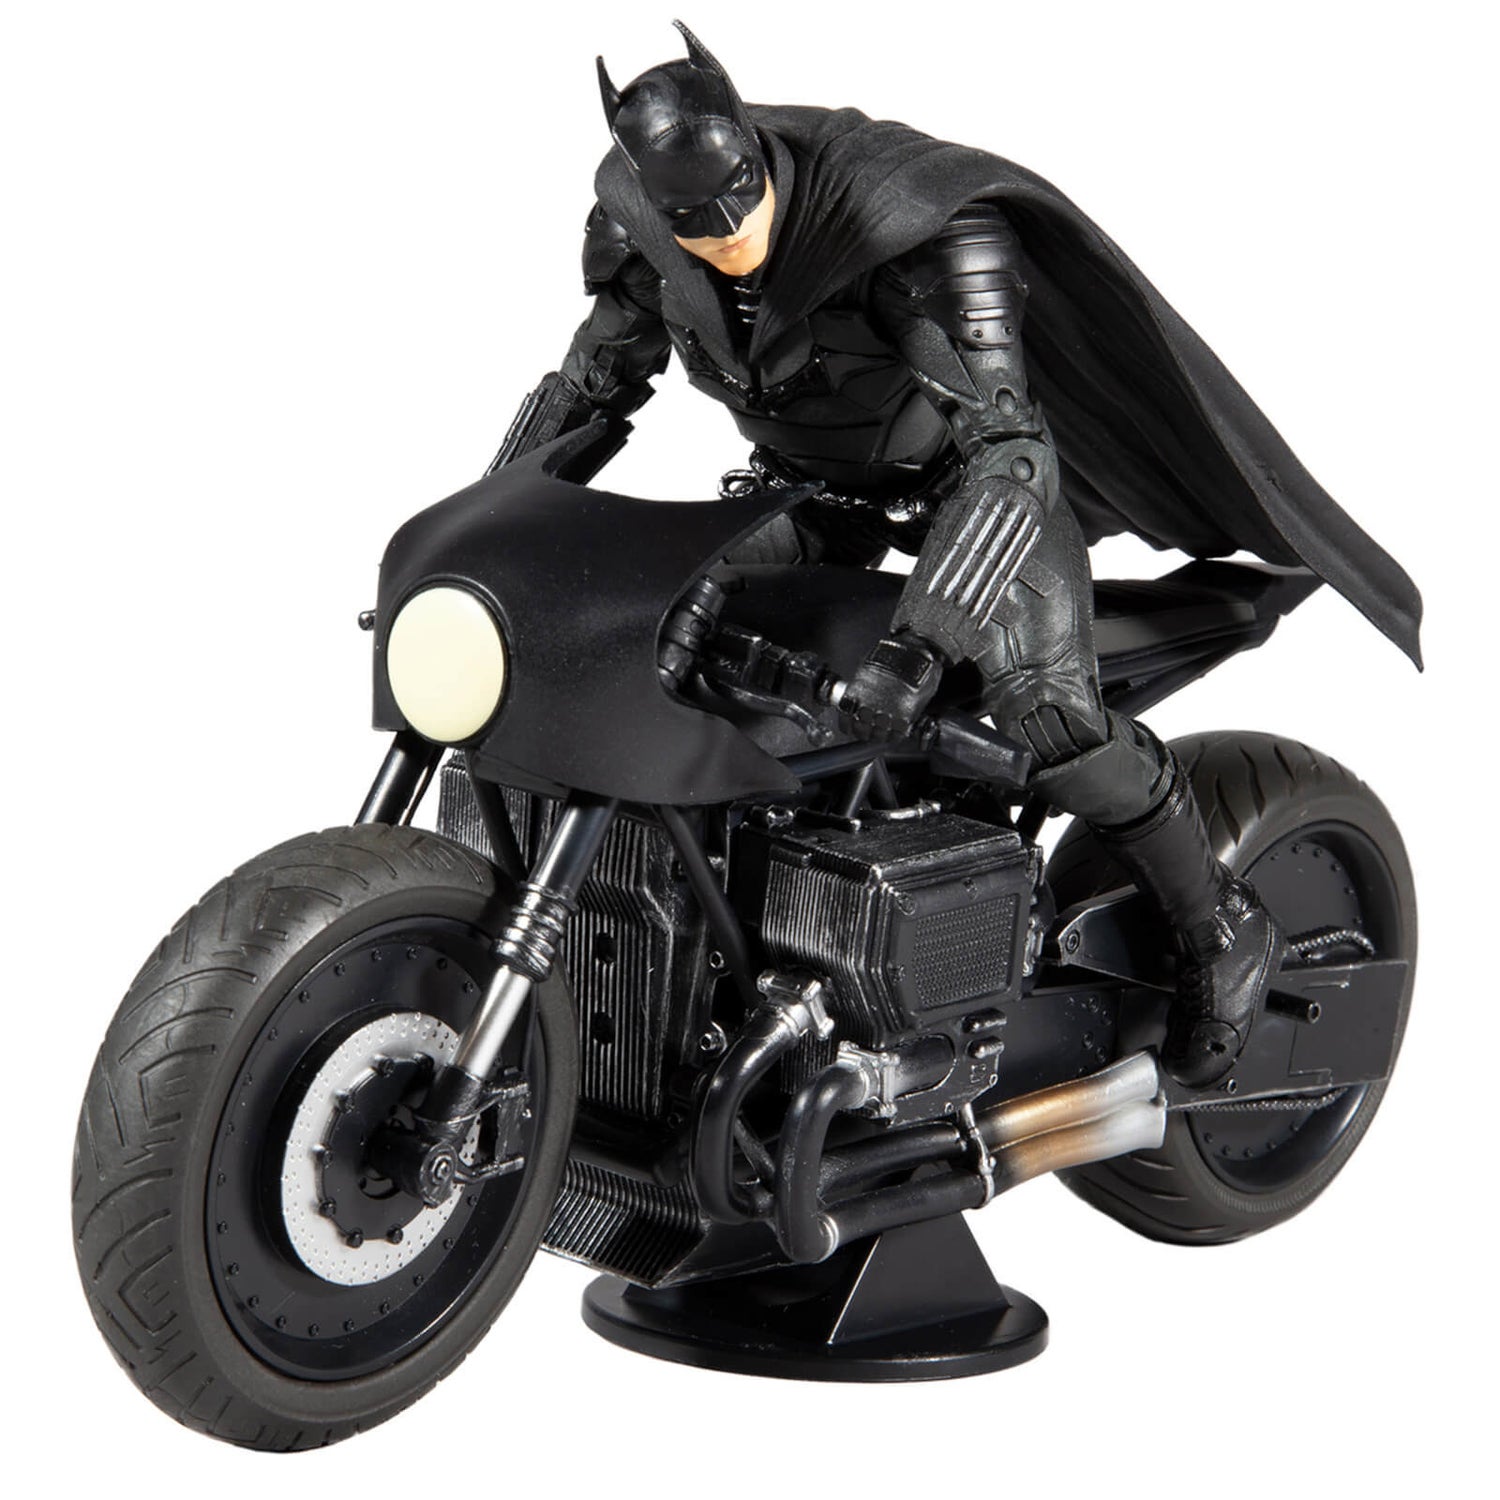 McFarlane DC Multiverse The Batman Vehicle - Batcycle